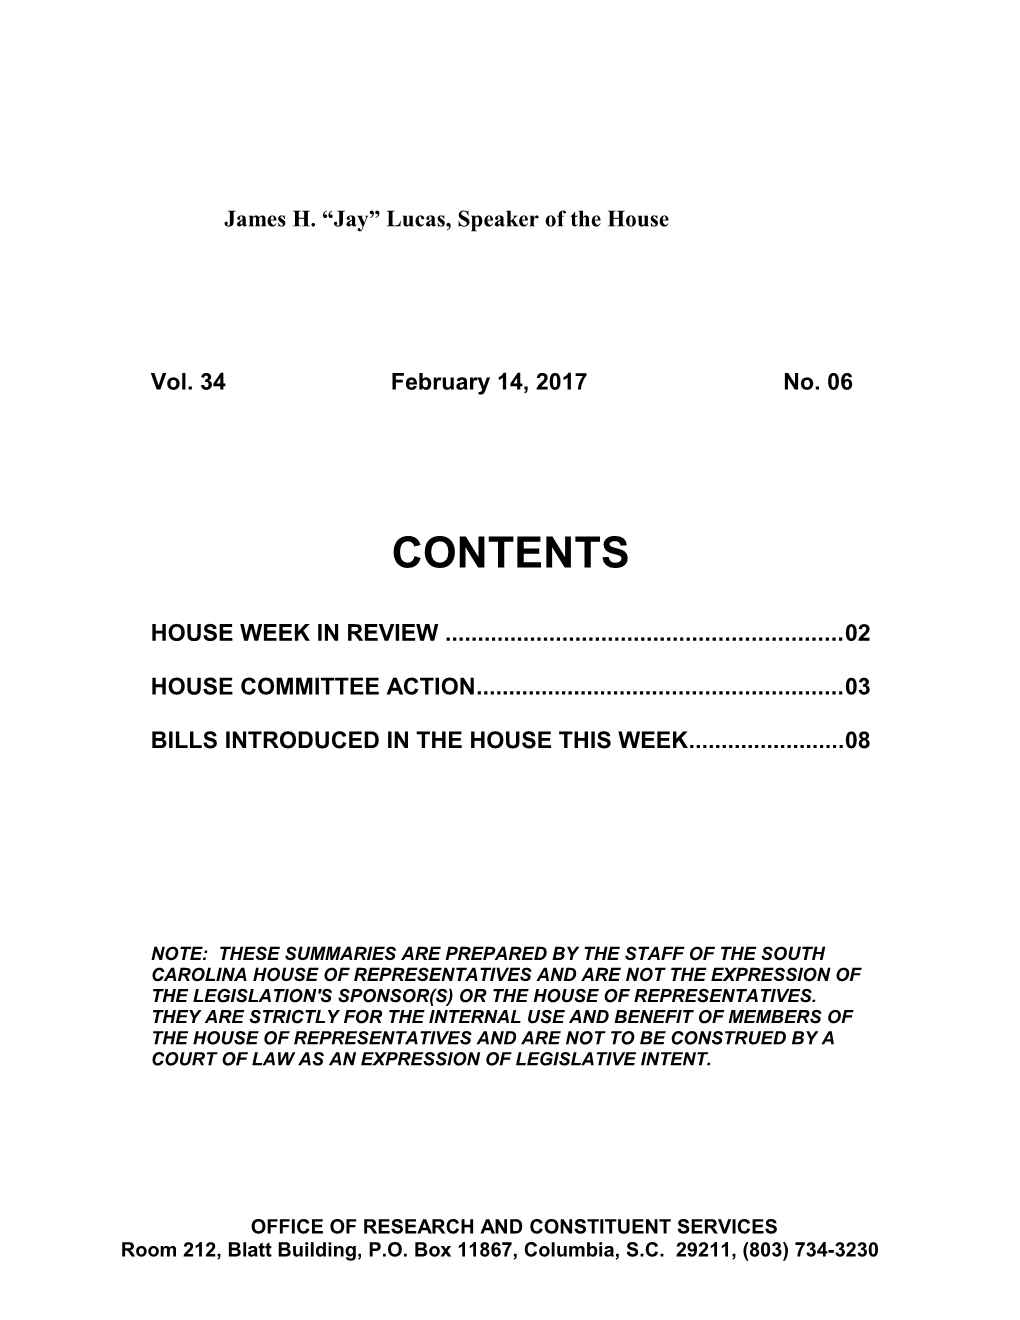 Legislative Update - Vol.34 No. 06 February 14, 2017 - South Carolina Legislature Online